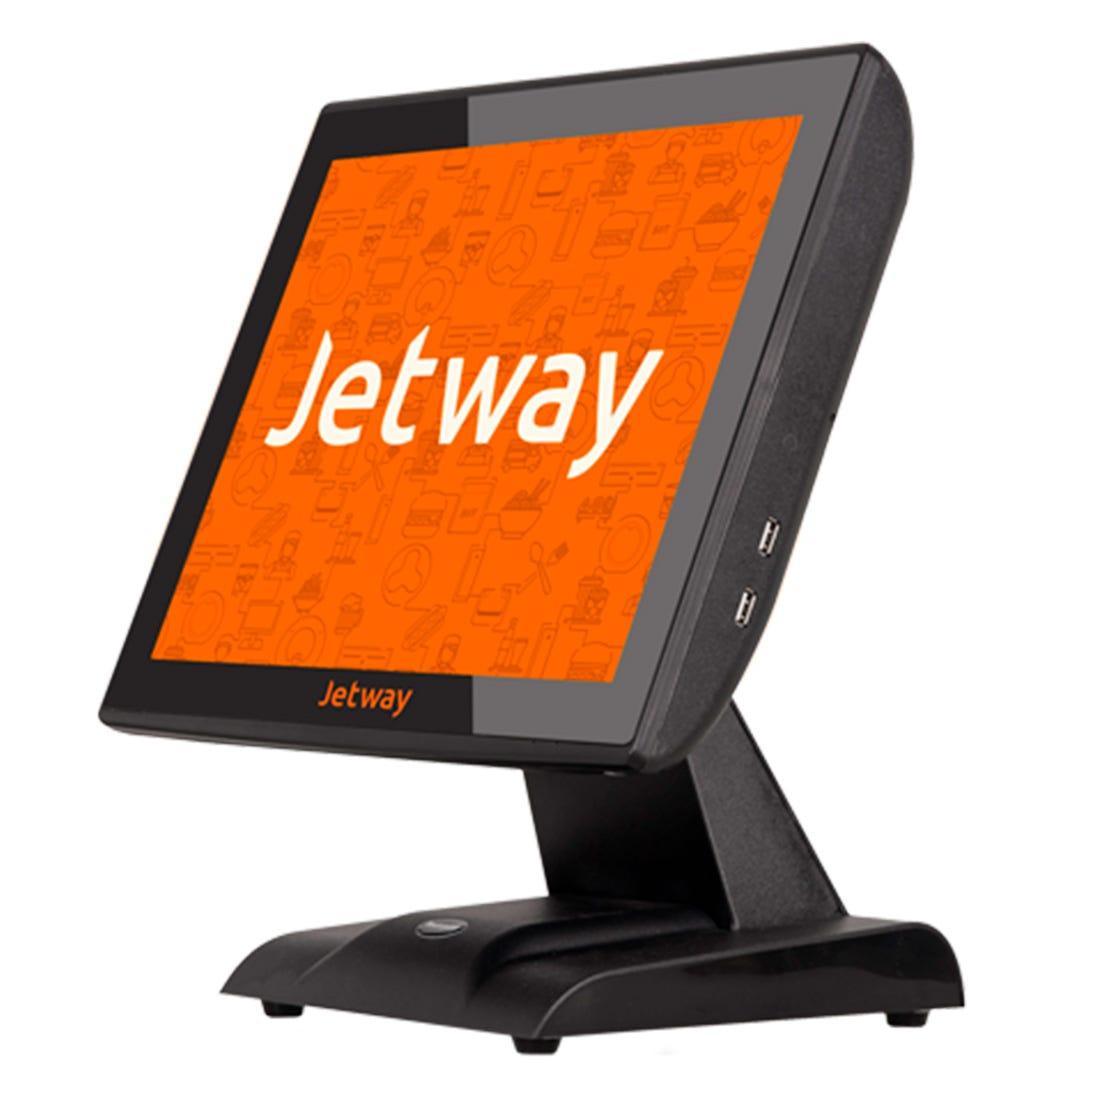 PDV Jetway Touch Screen 15" JPT-700 001249 - Mega Market